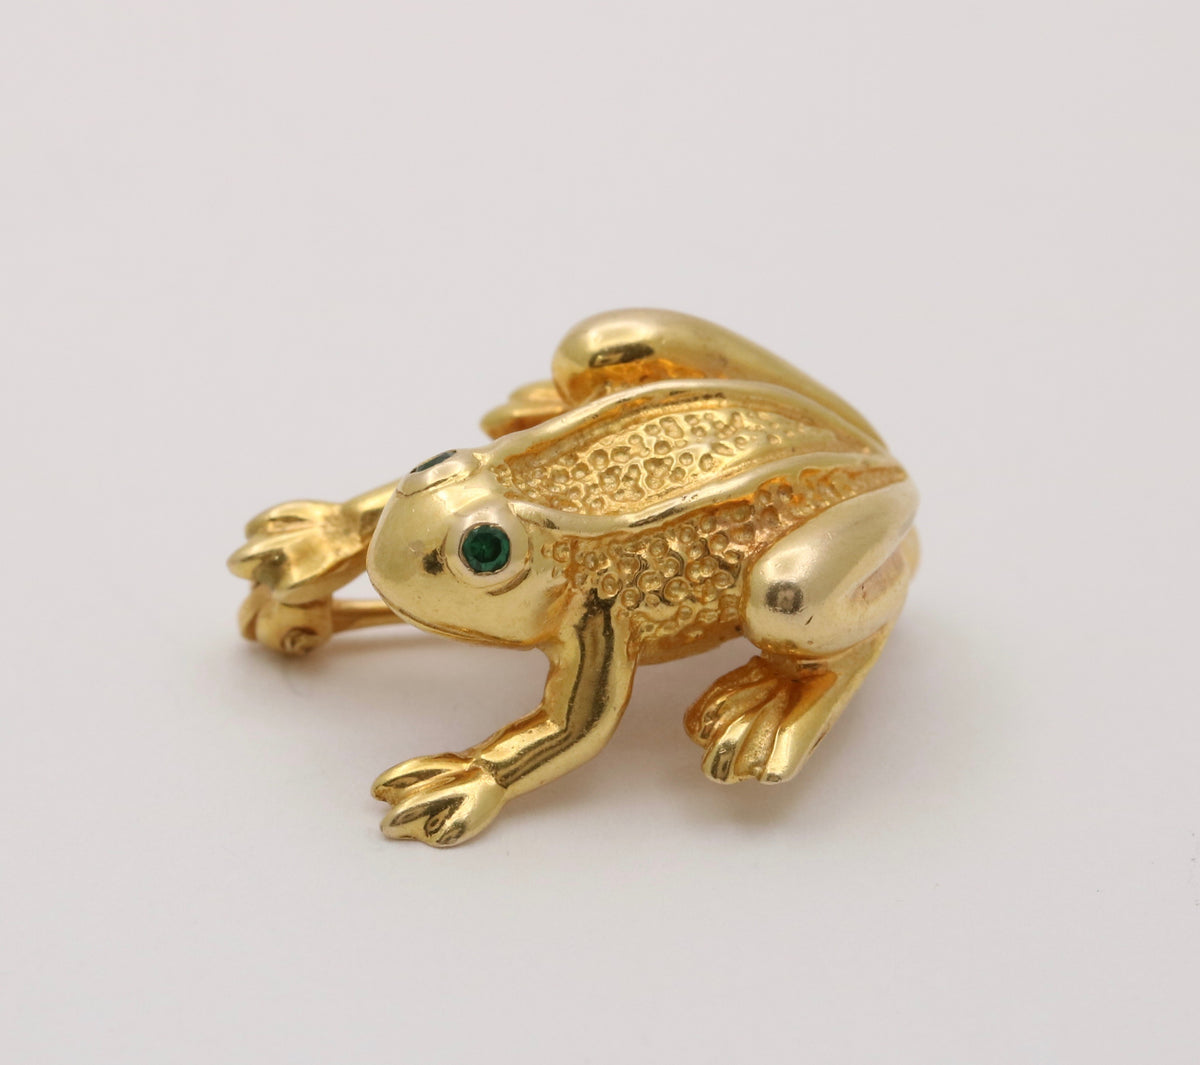 Vintage 14K Gold Frog Pin